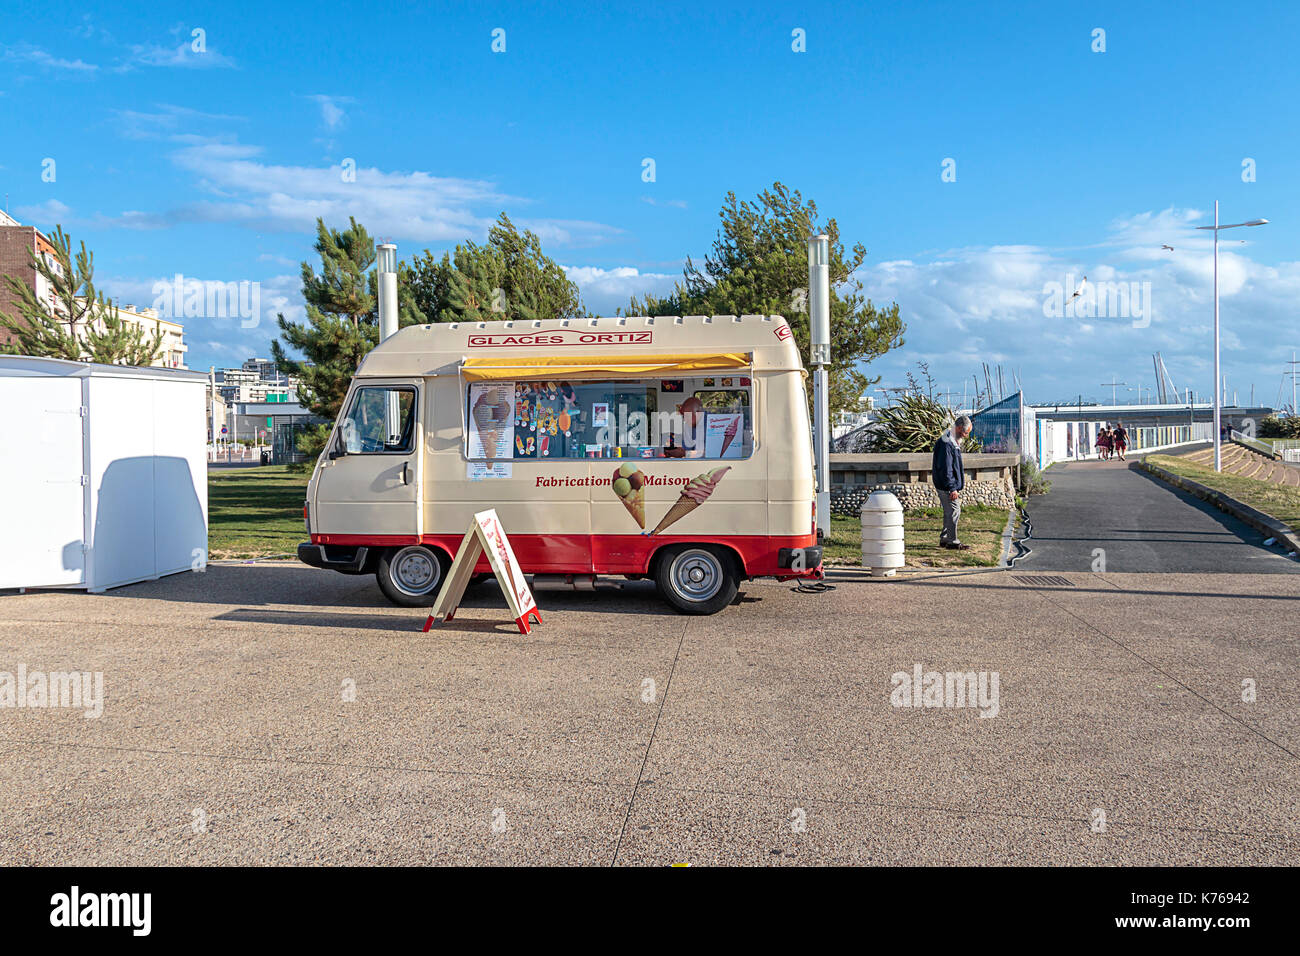 Glaces Ortiz, Ice Cream Van At La Plage In Le Havre, France Stock Photo -  Alamy